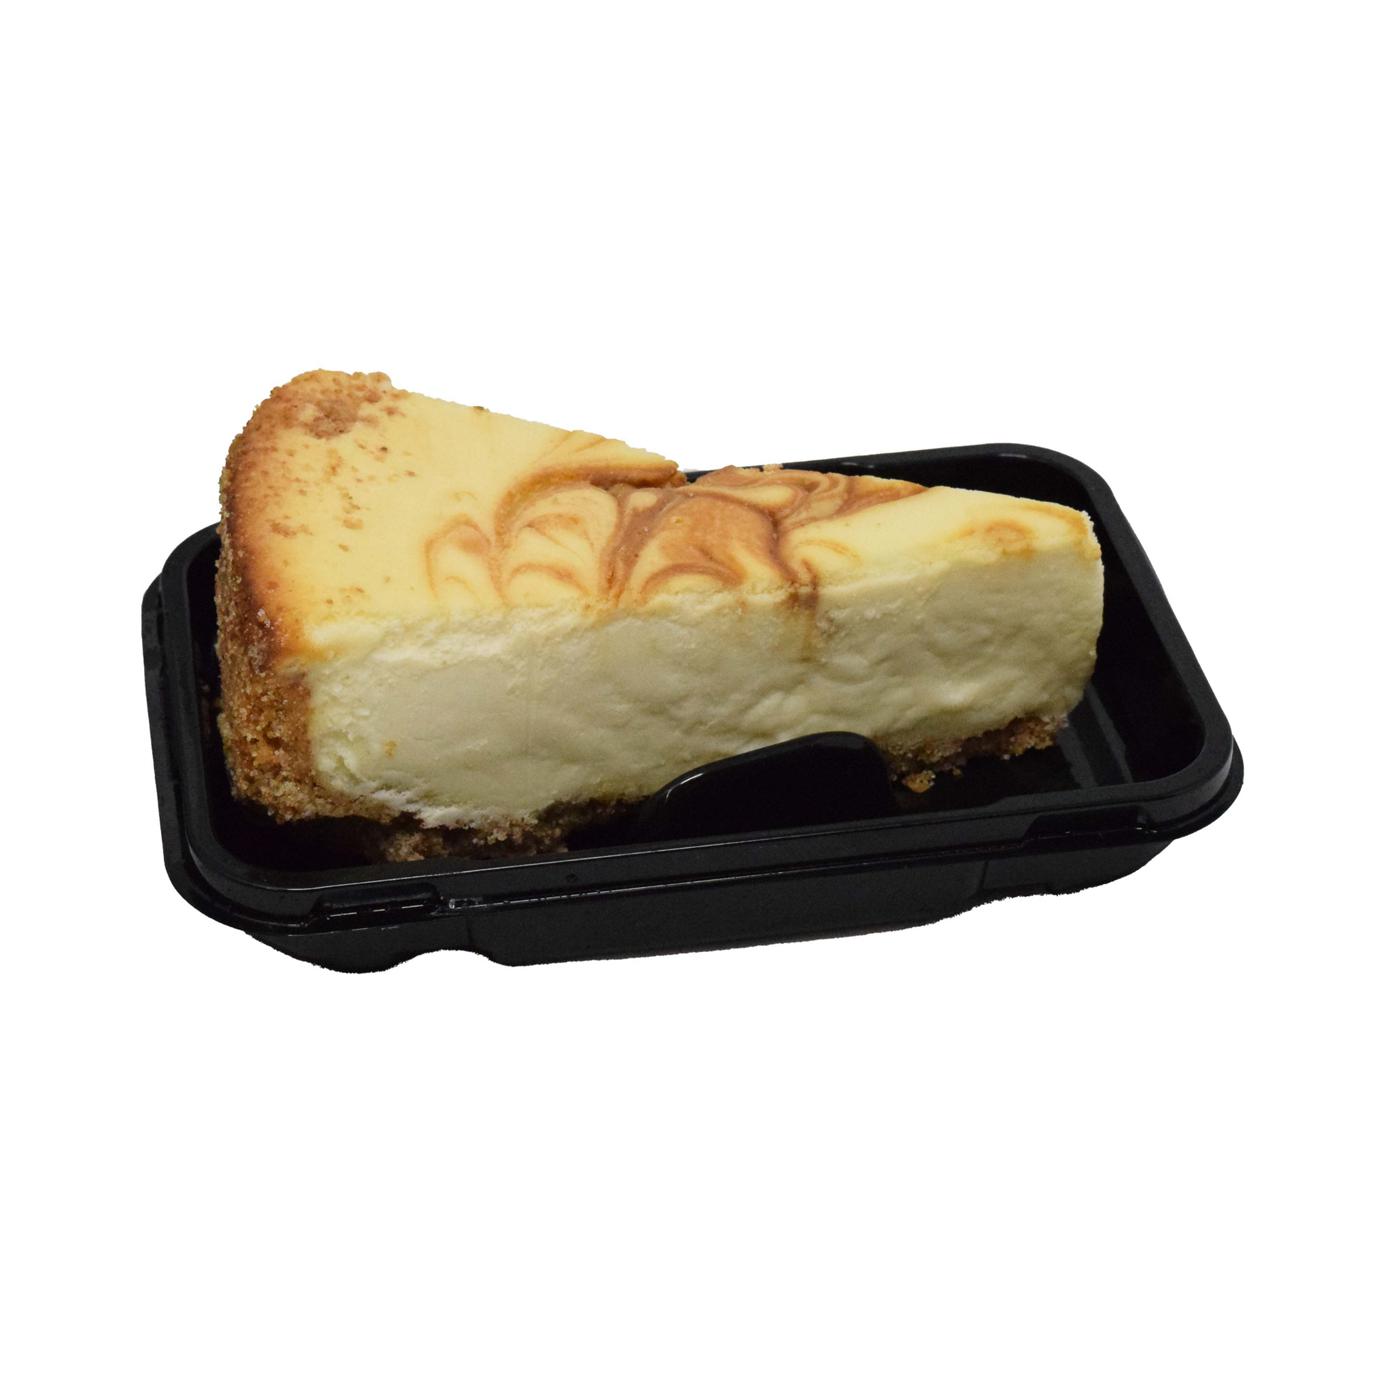 Cotton Blues Cheesecake Company Sea-Salted Caramel Swirl Cheesecake Slice ; image 2 of 2